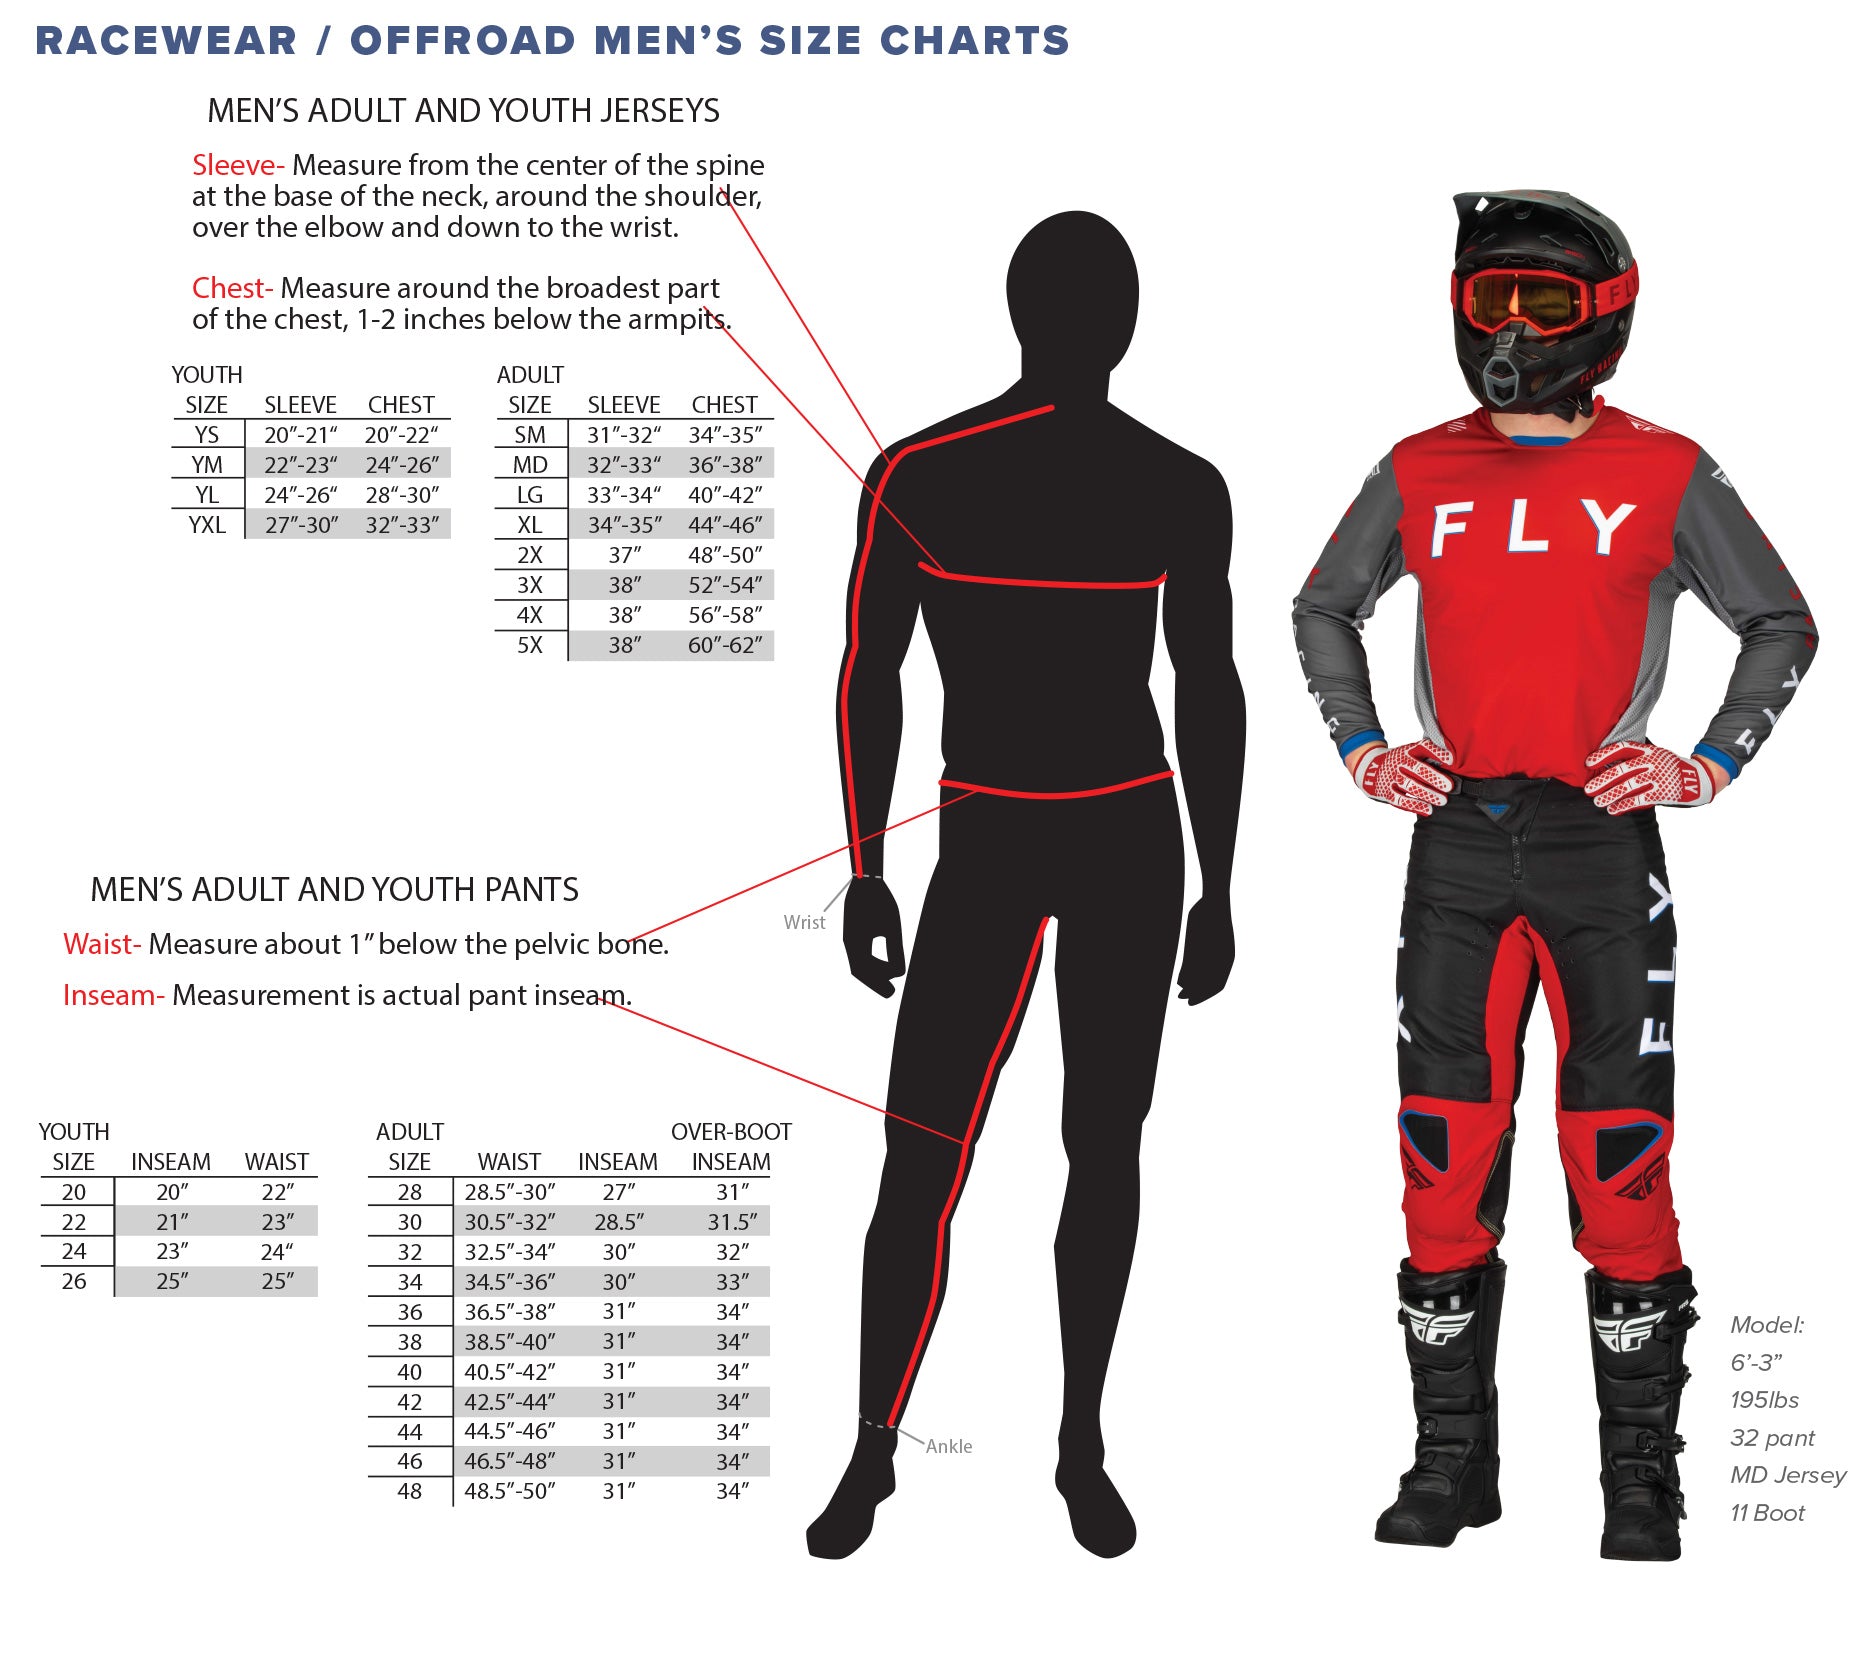 FLY Racing Men's MX Racewear Size Chart